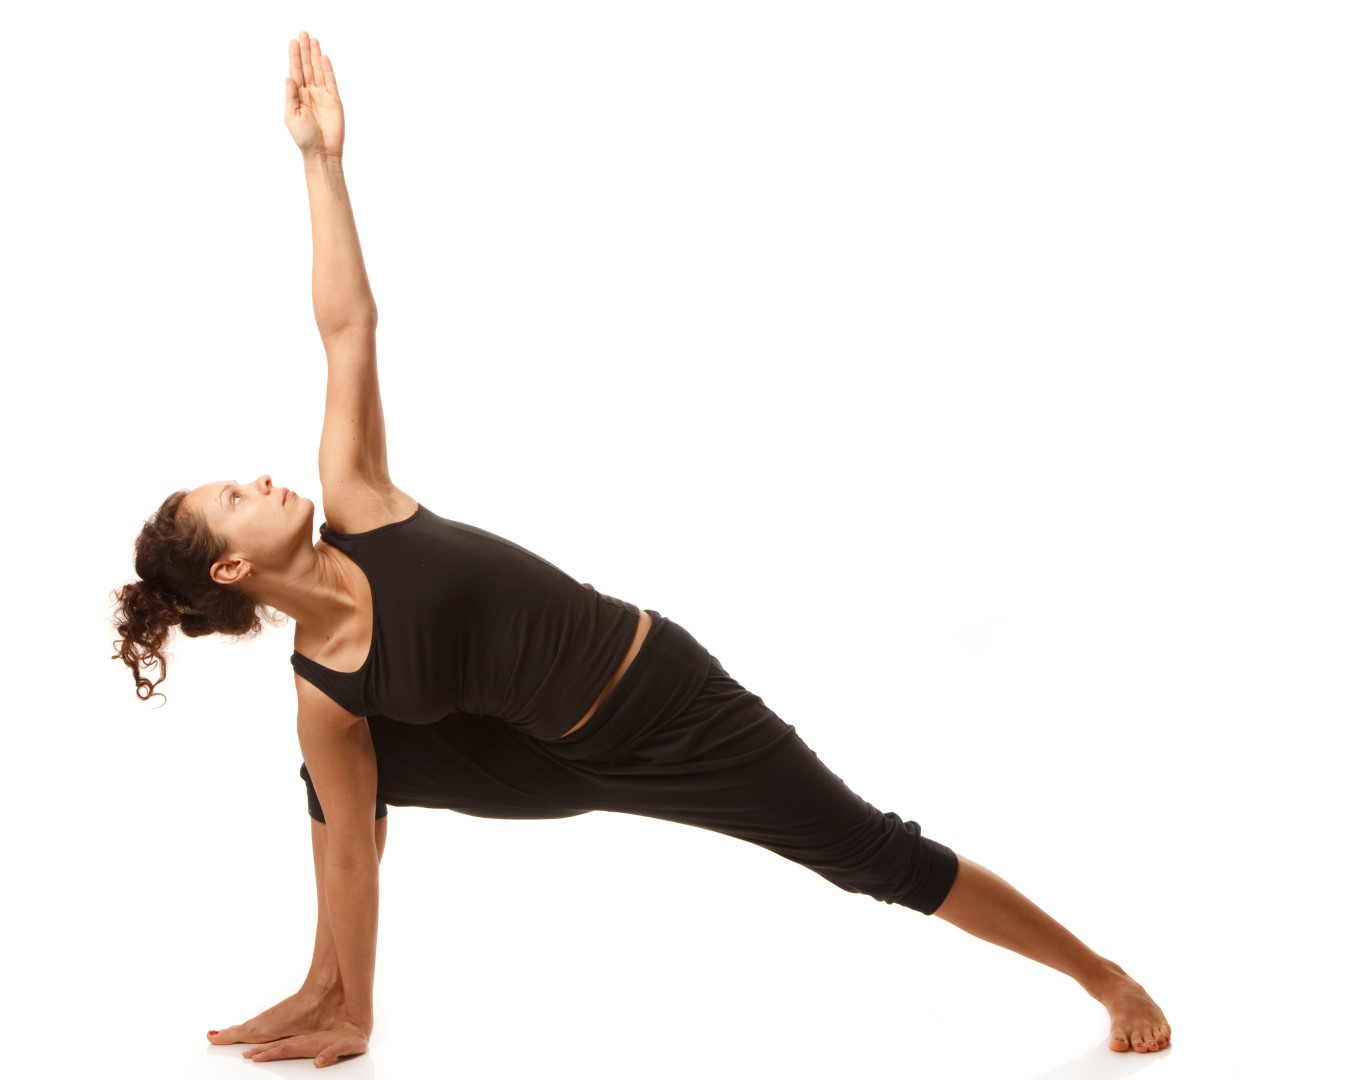 A woman demonstrates the half kneeling twist yoga pose